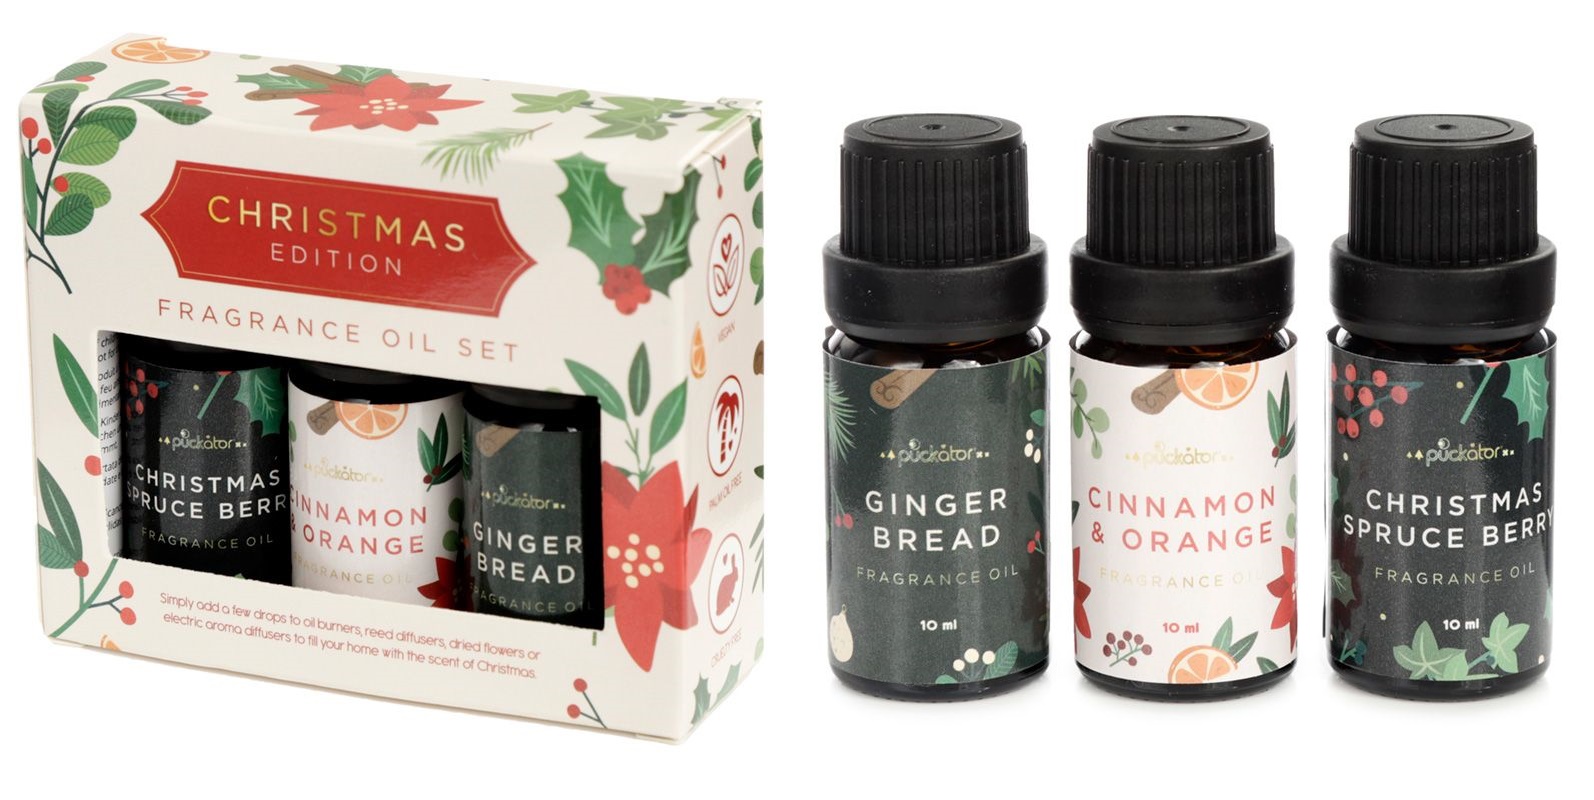 Eden Set of 3 Christmas Fragrance Oils Gift Set - Gingerbread, Cinnamon & Orange, Spruce Berry